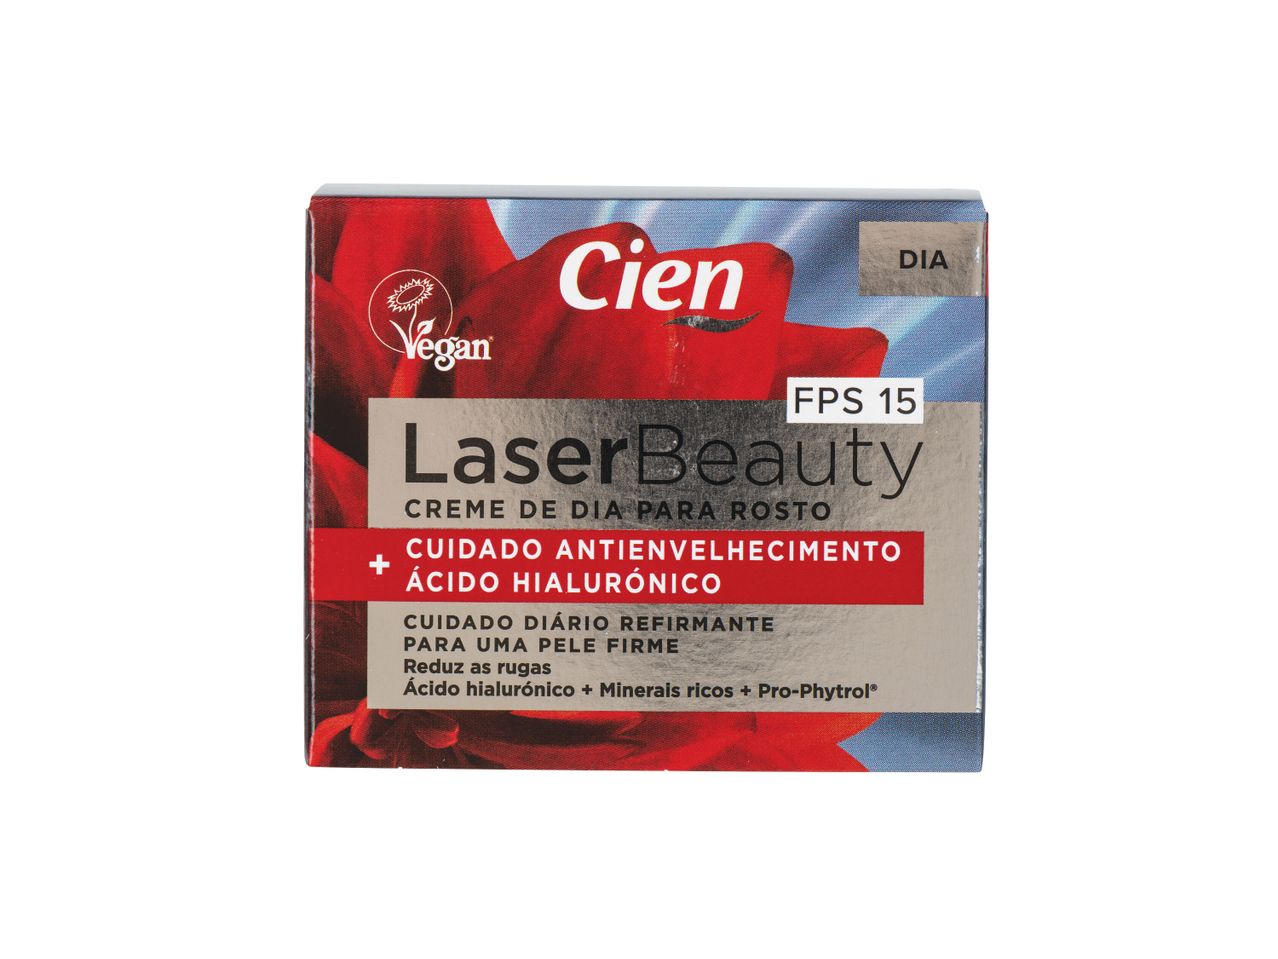 Ver empliada: Cien® Creme de Rosto Laser Beauty - Imagem 2